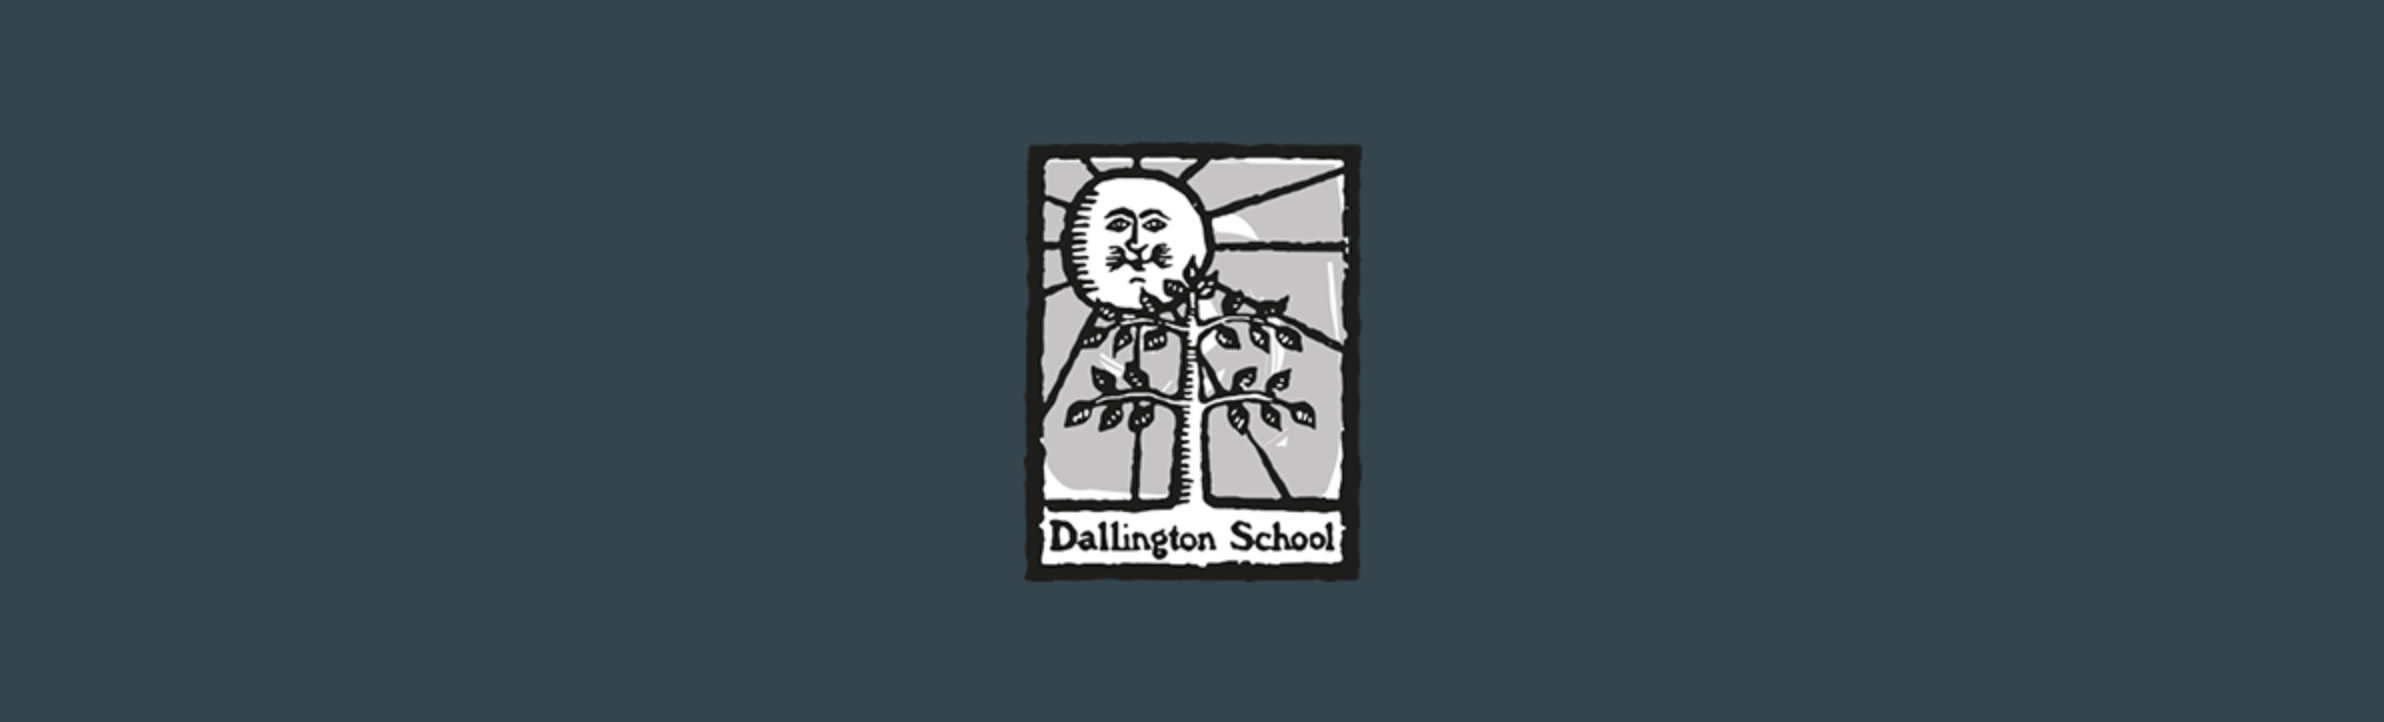 Dallington - wallpaper